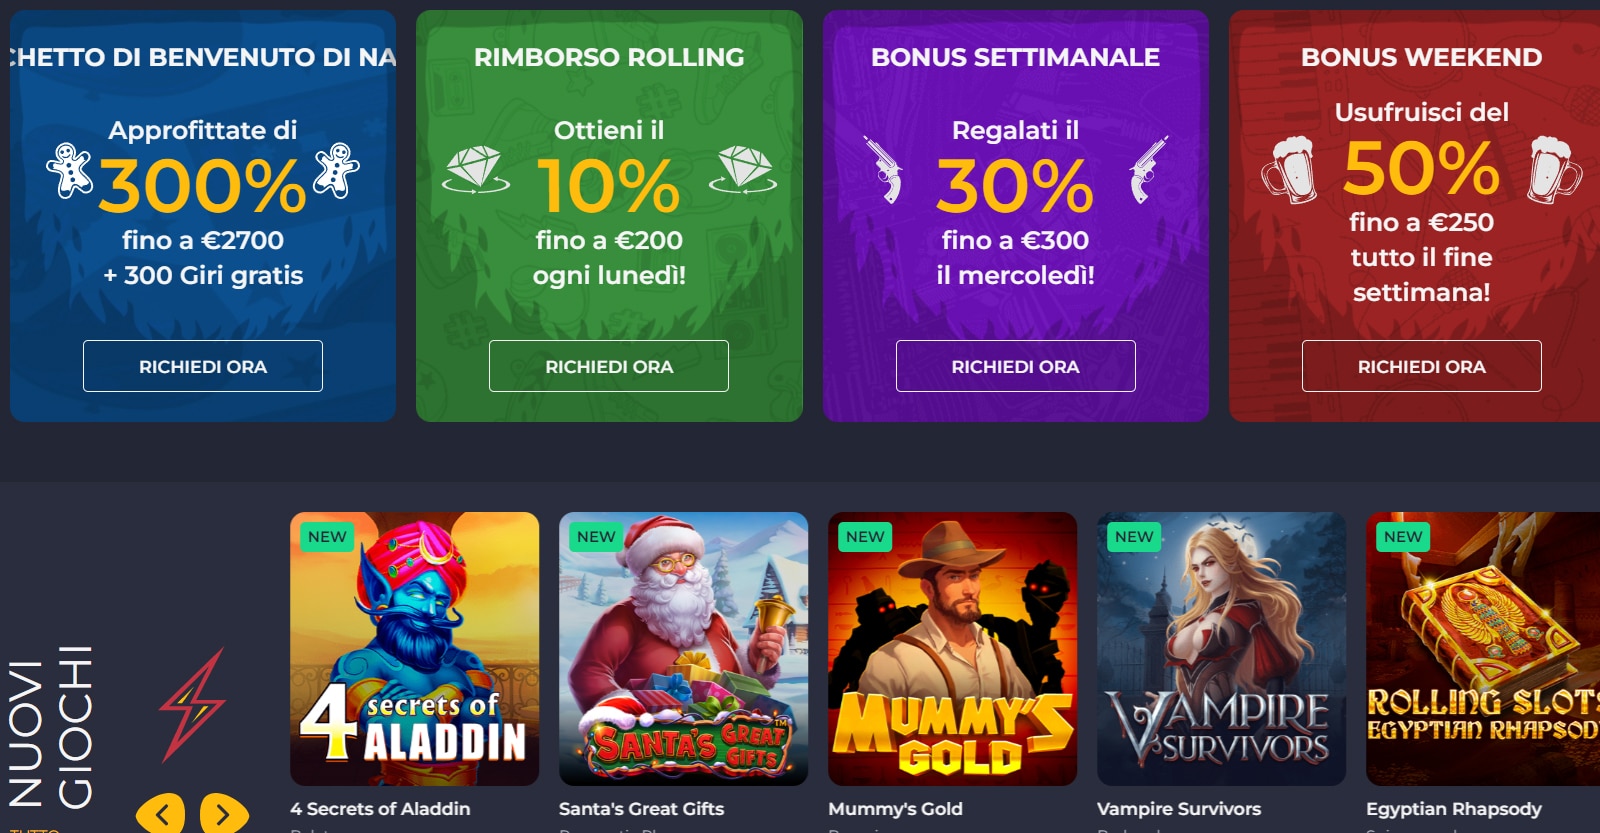 rolling slots casino bonus